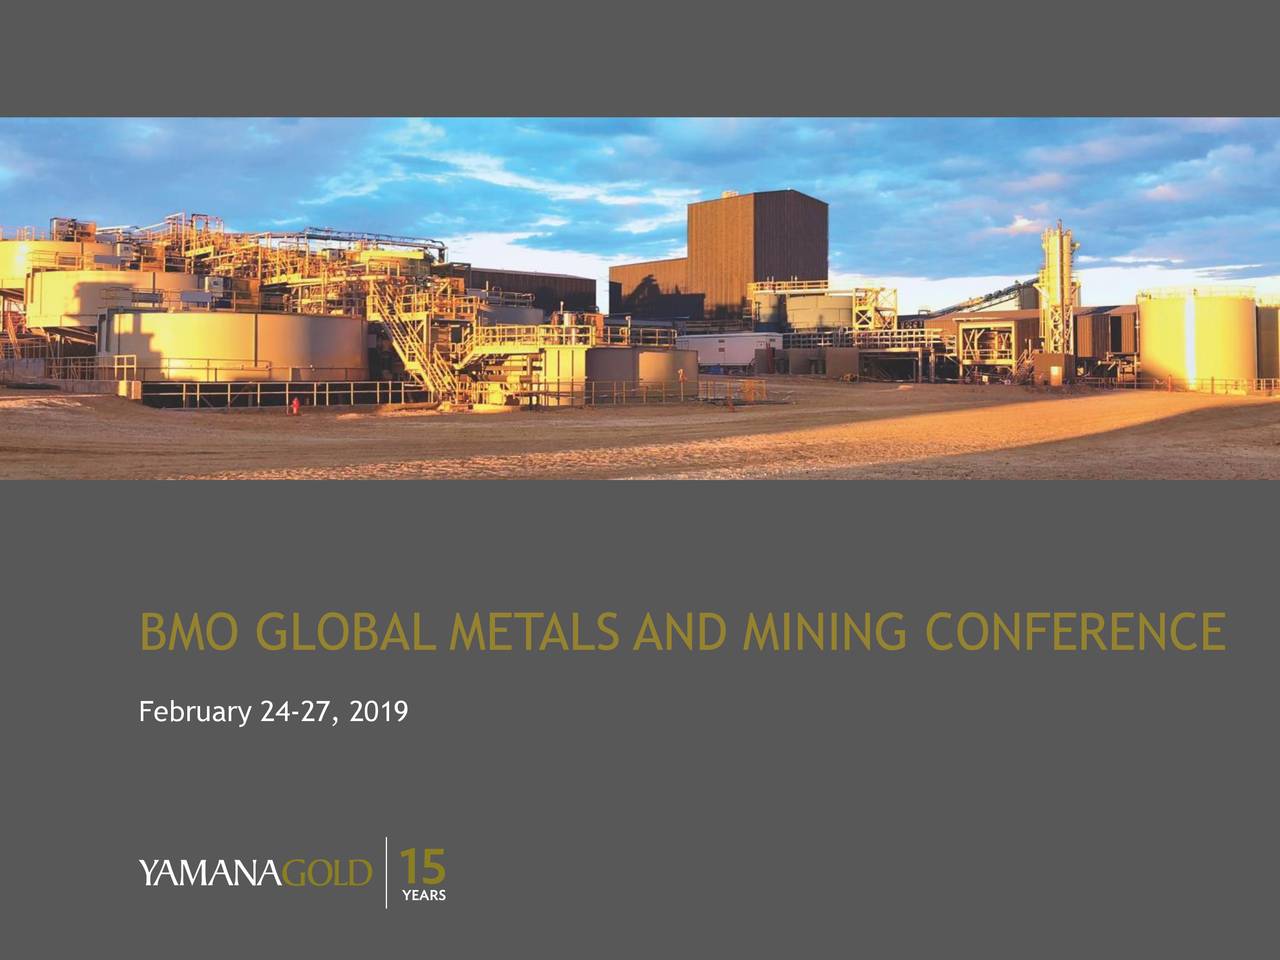 Yamana Gold (AUY) Presents At BMO Capital Markets Global Metals